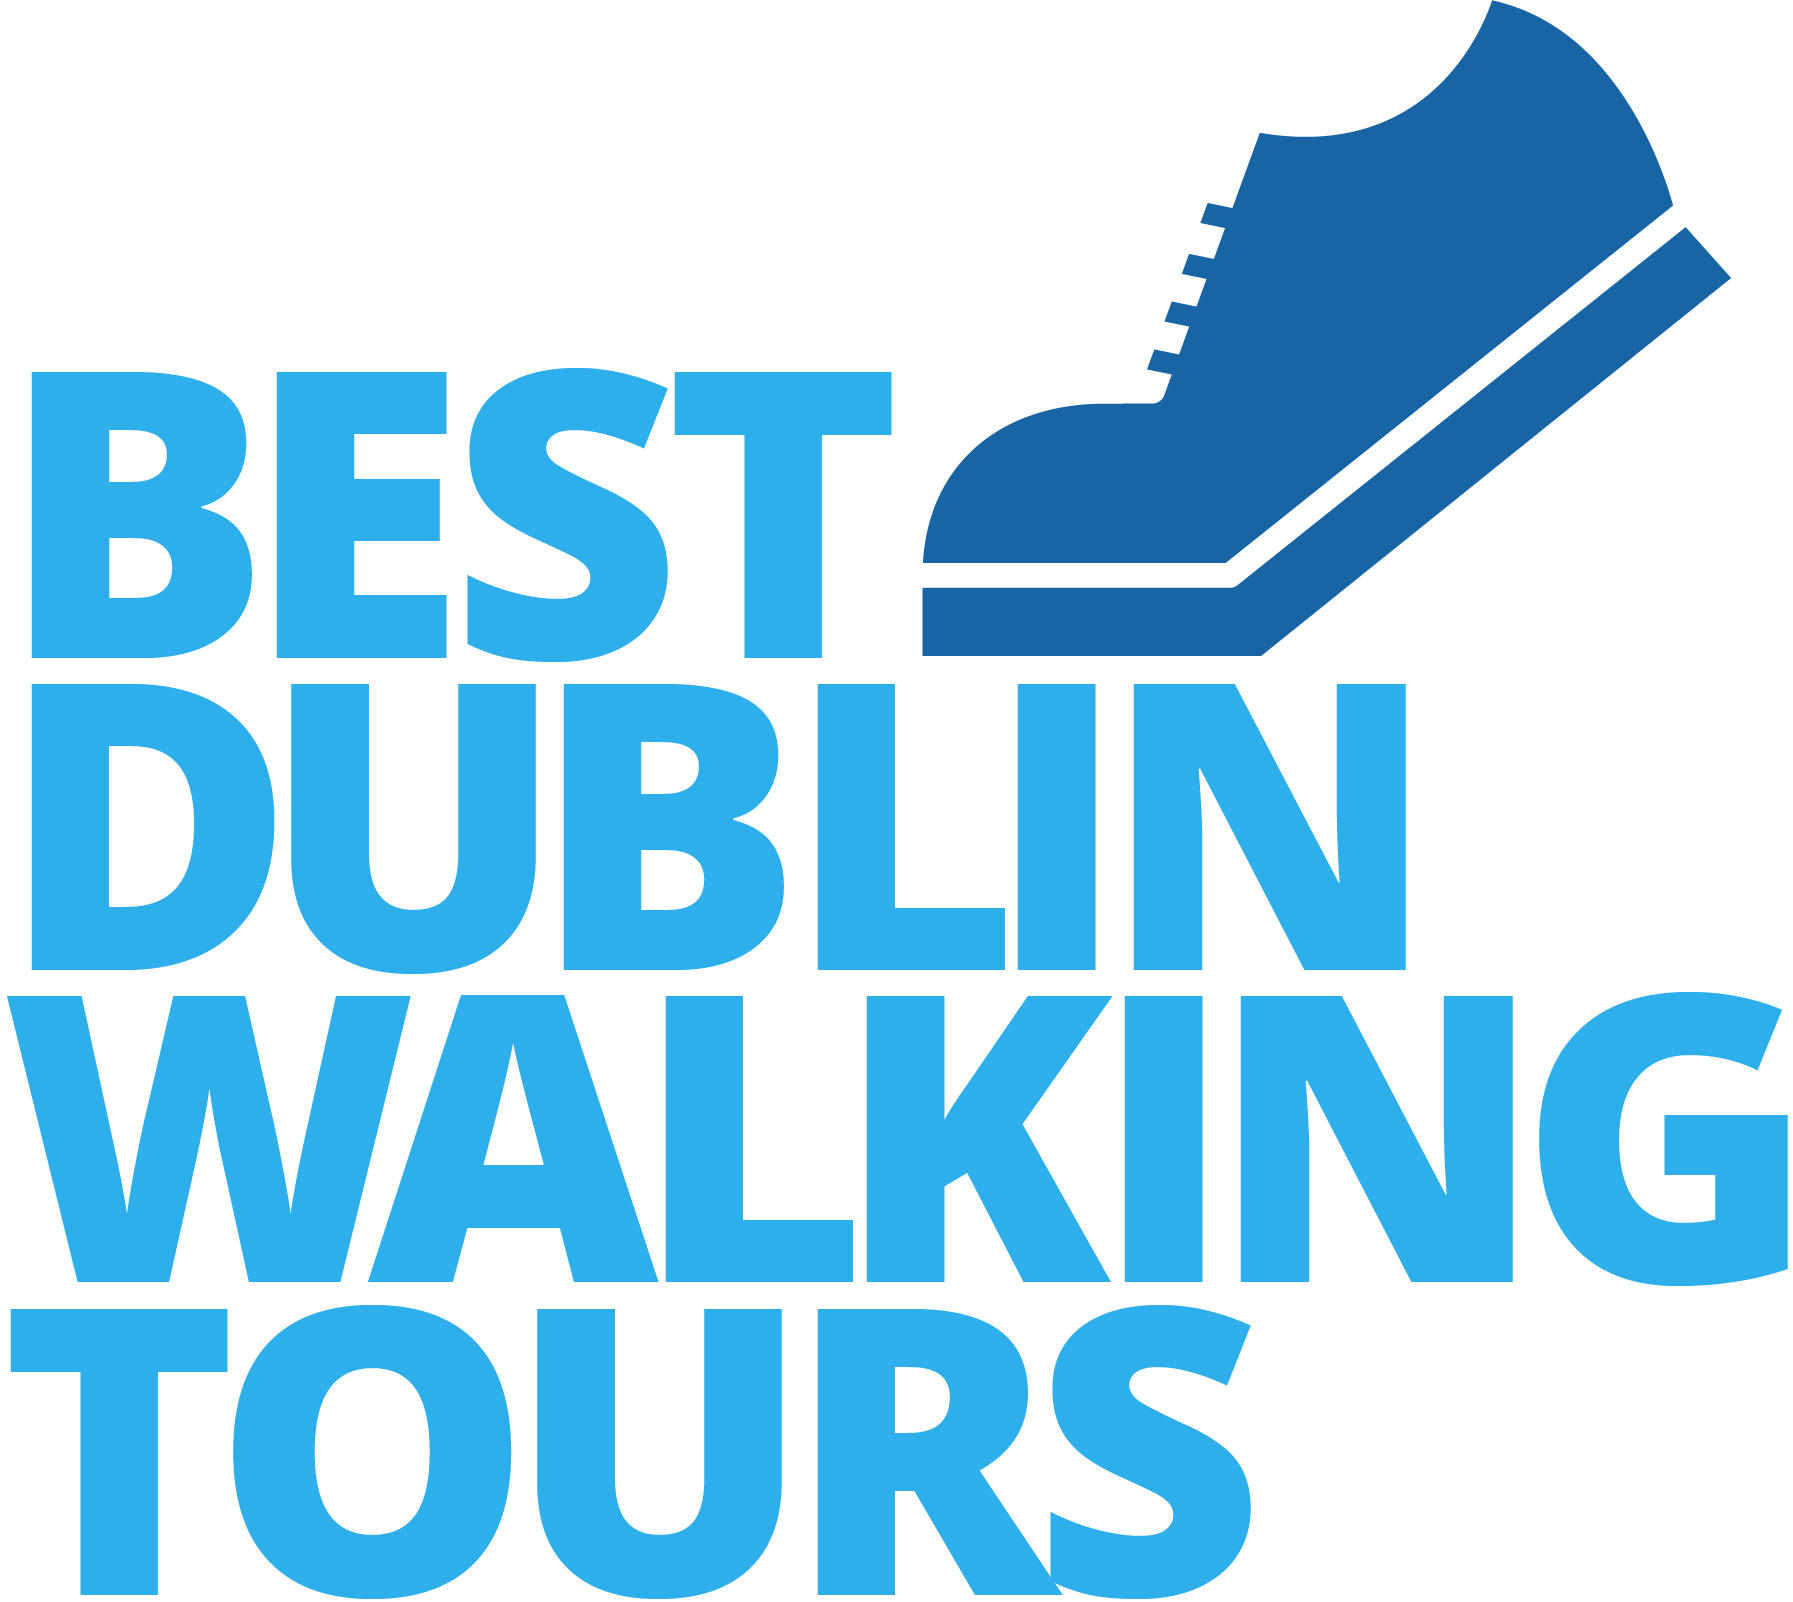 walking tour of dublin ireland